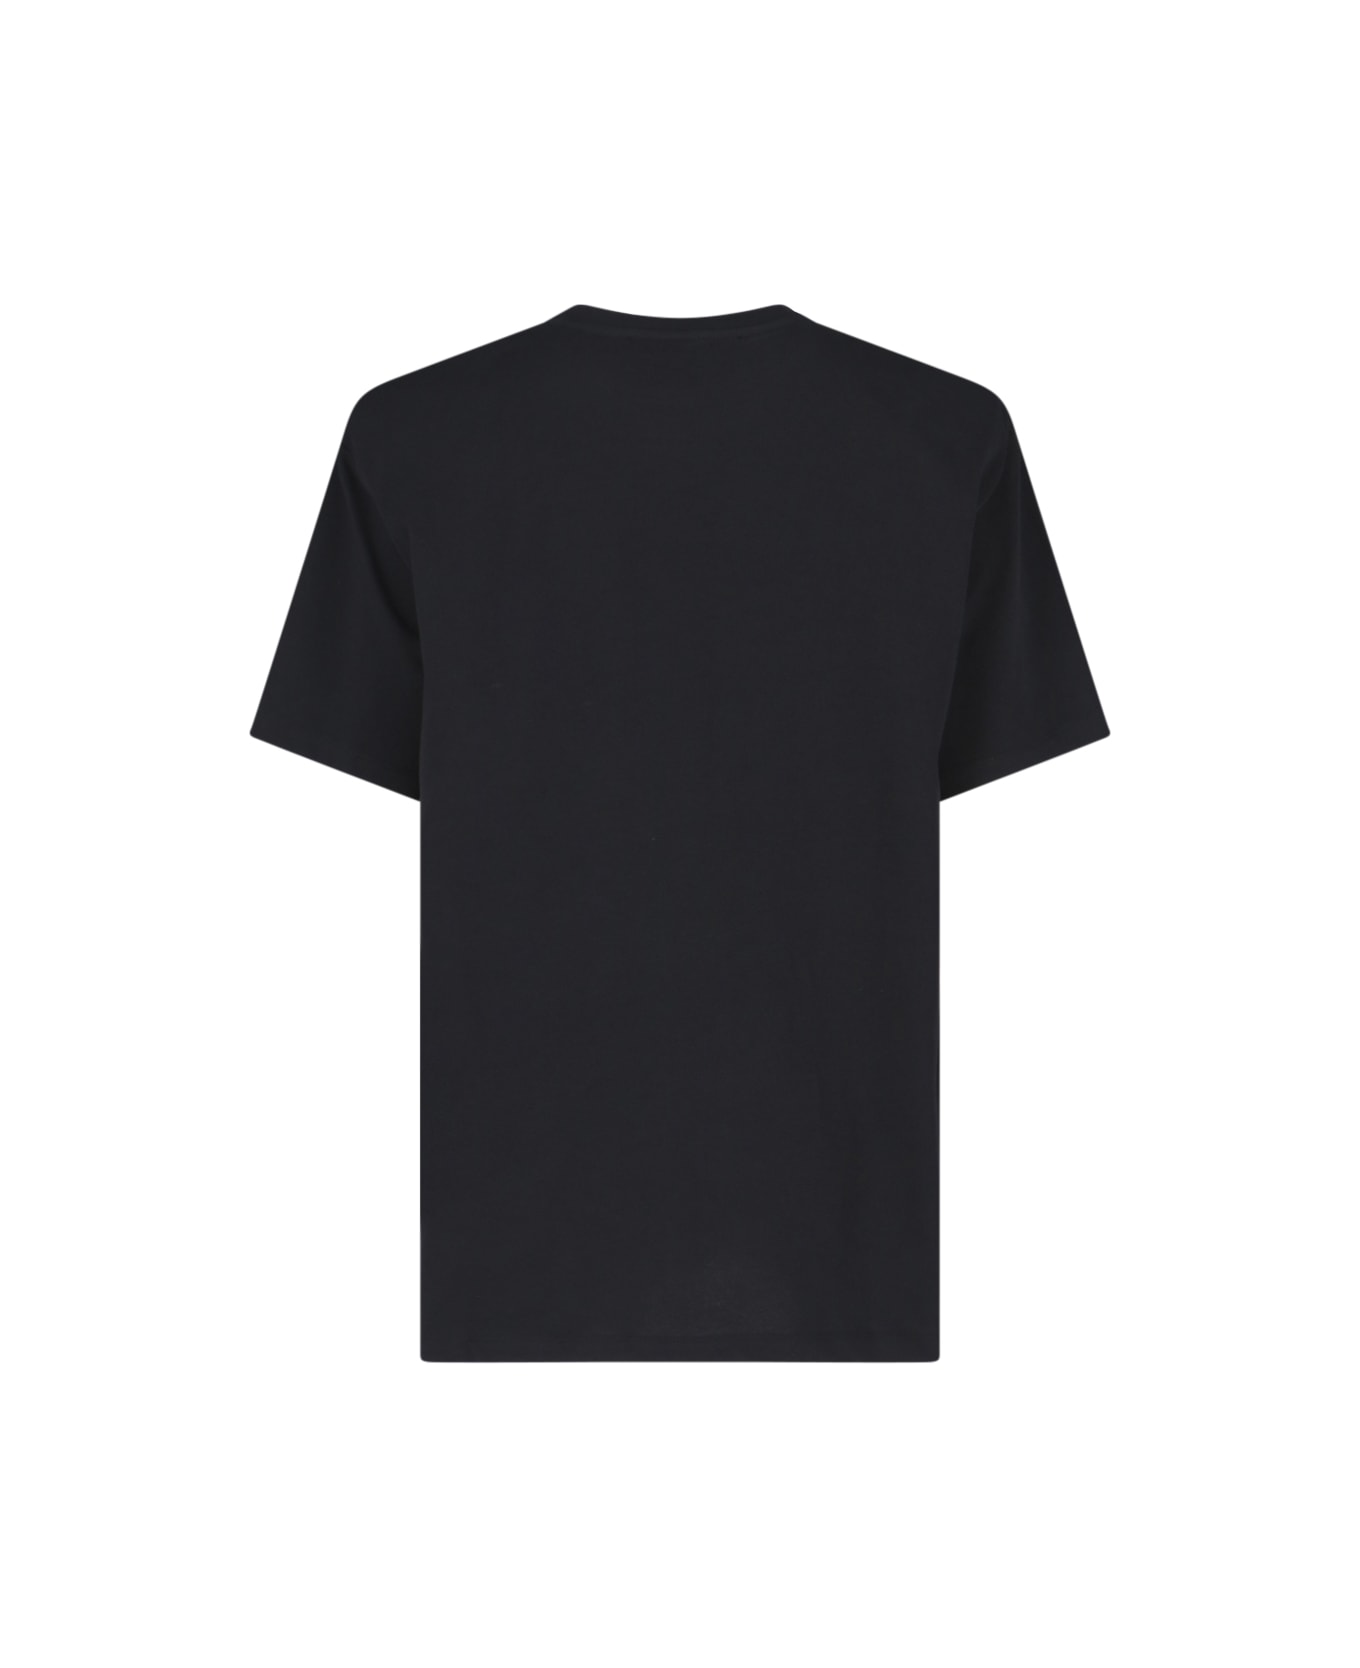 Rotate by Birger Christensen Logo T-shirt - Black  